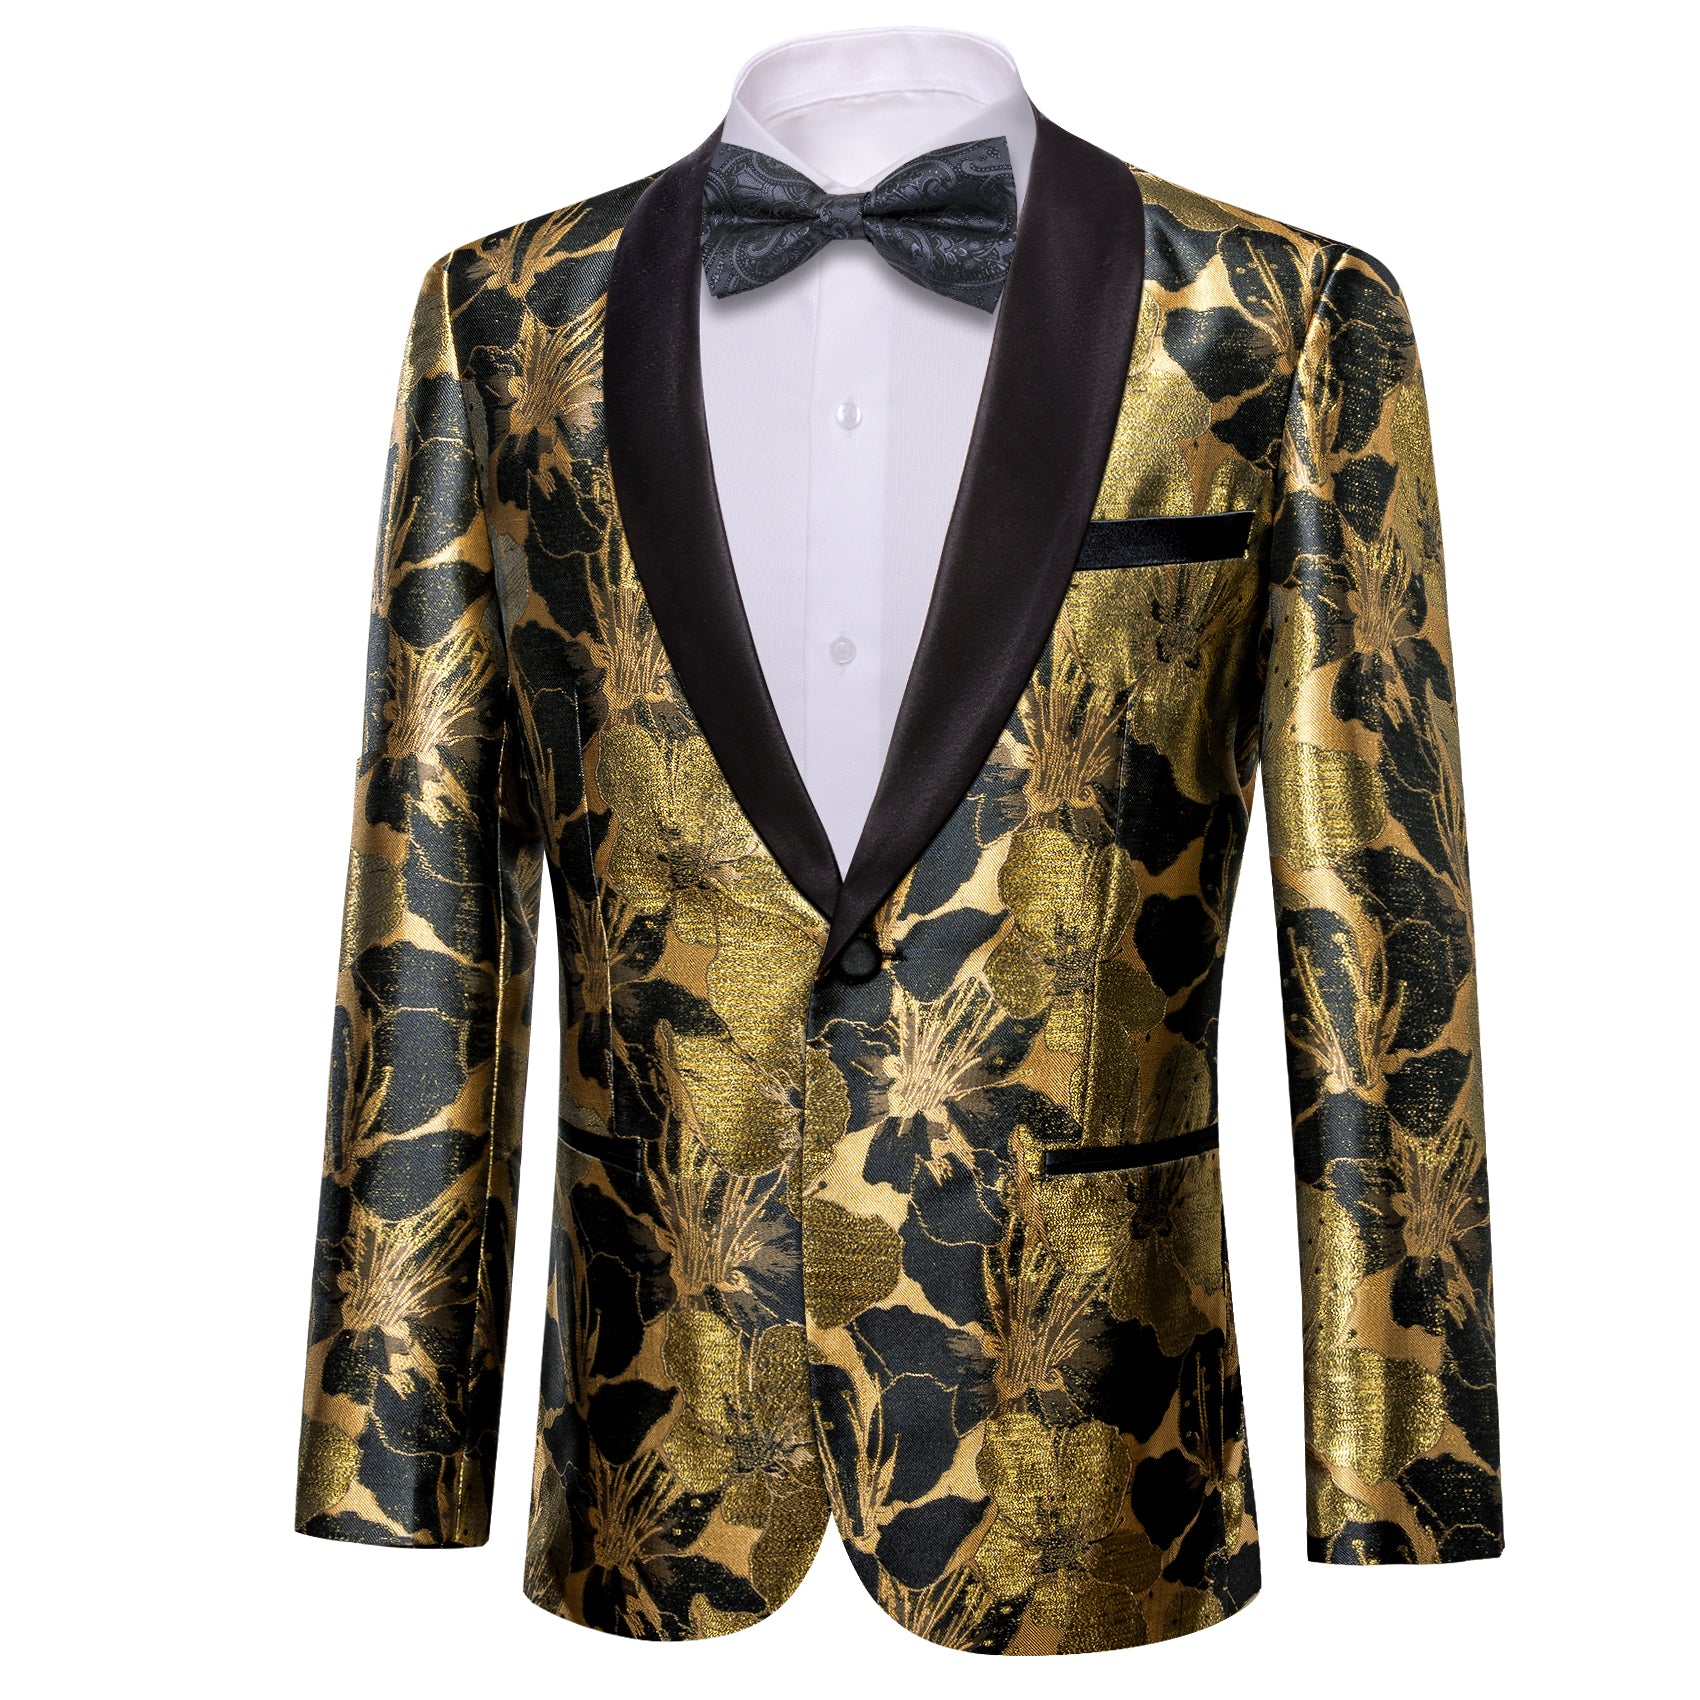 Barry.wang Shawl Collar Suit Black Gold  Floral Men's Suit Jacket Slim One Button Stylish Blazer